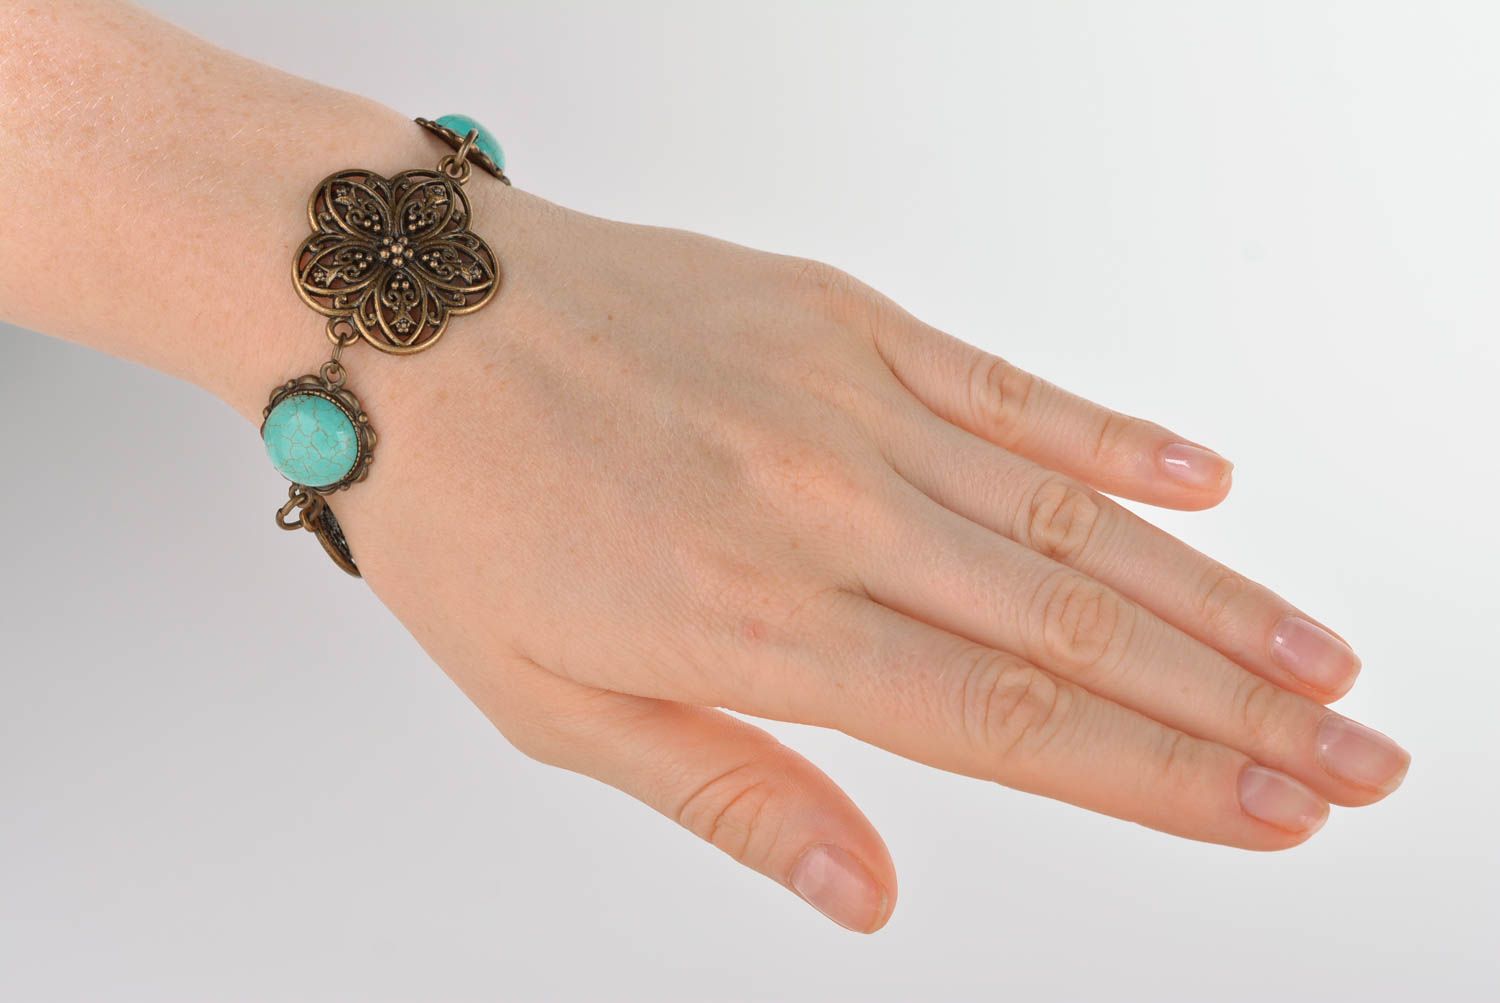 Unusual handmade metal bracelet stone bracelet wrist bracelet design gift ideas photo 3